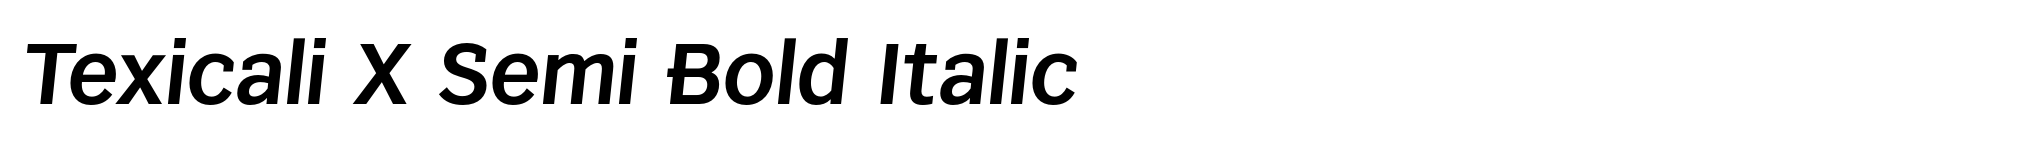 Texicali X Semi Bold Italic image